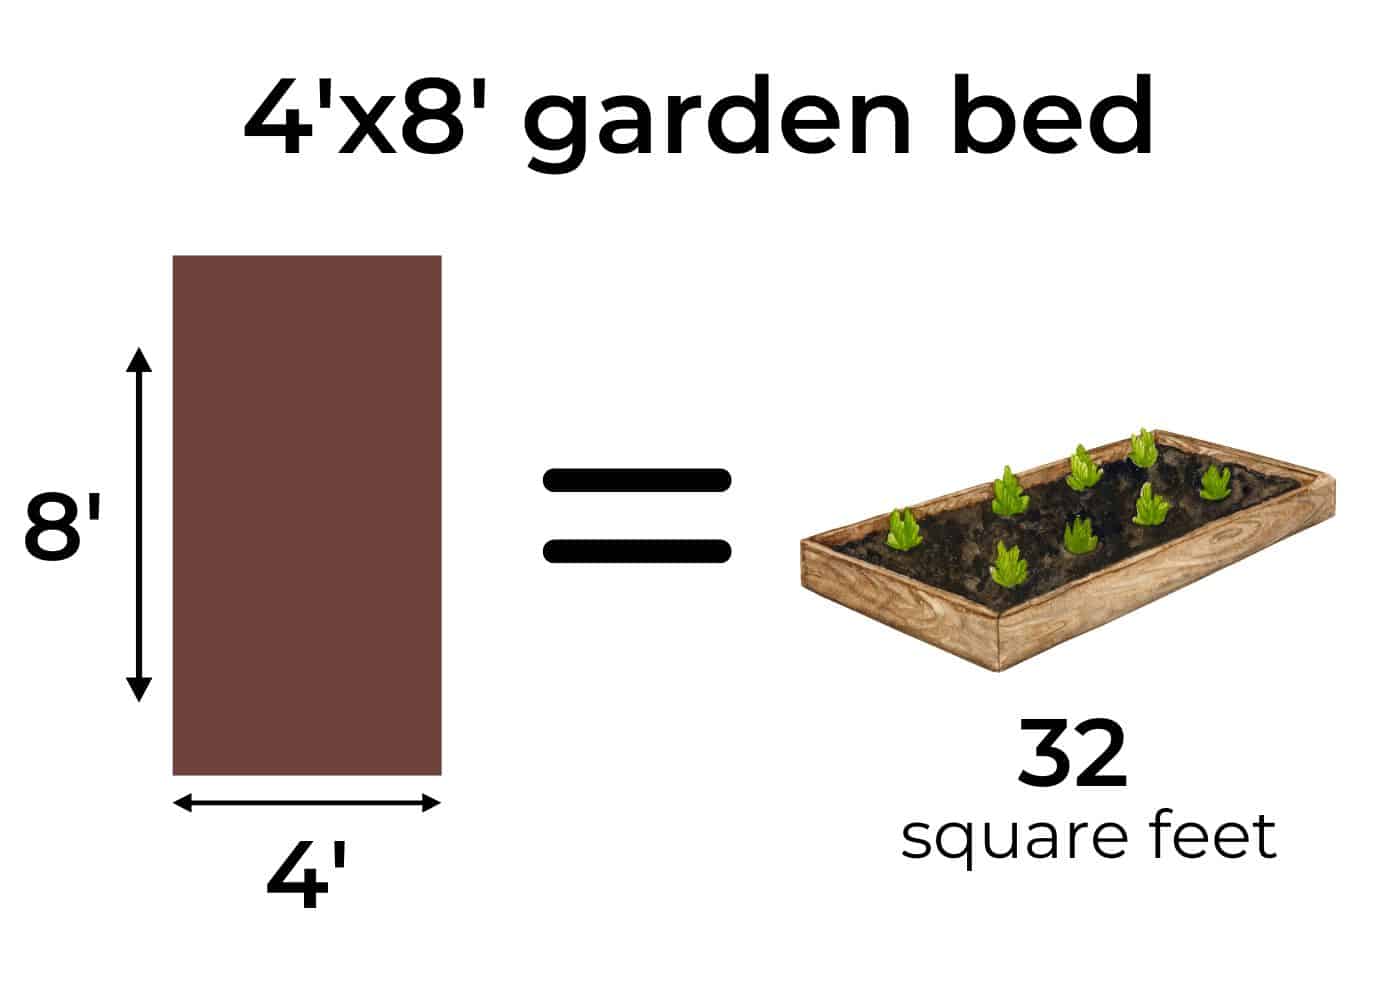 4'x8' garden bed diagram